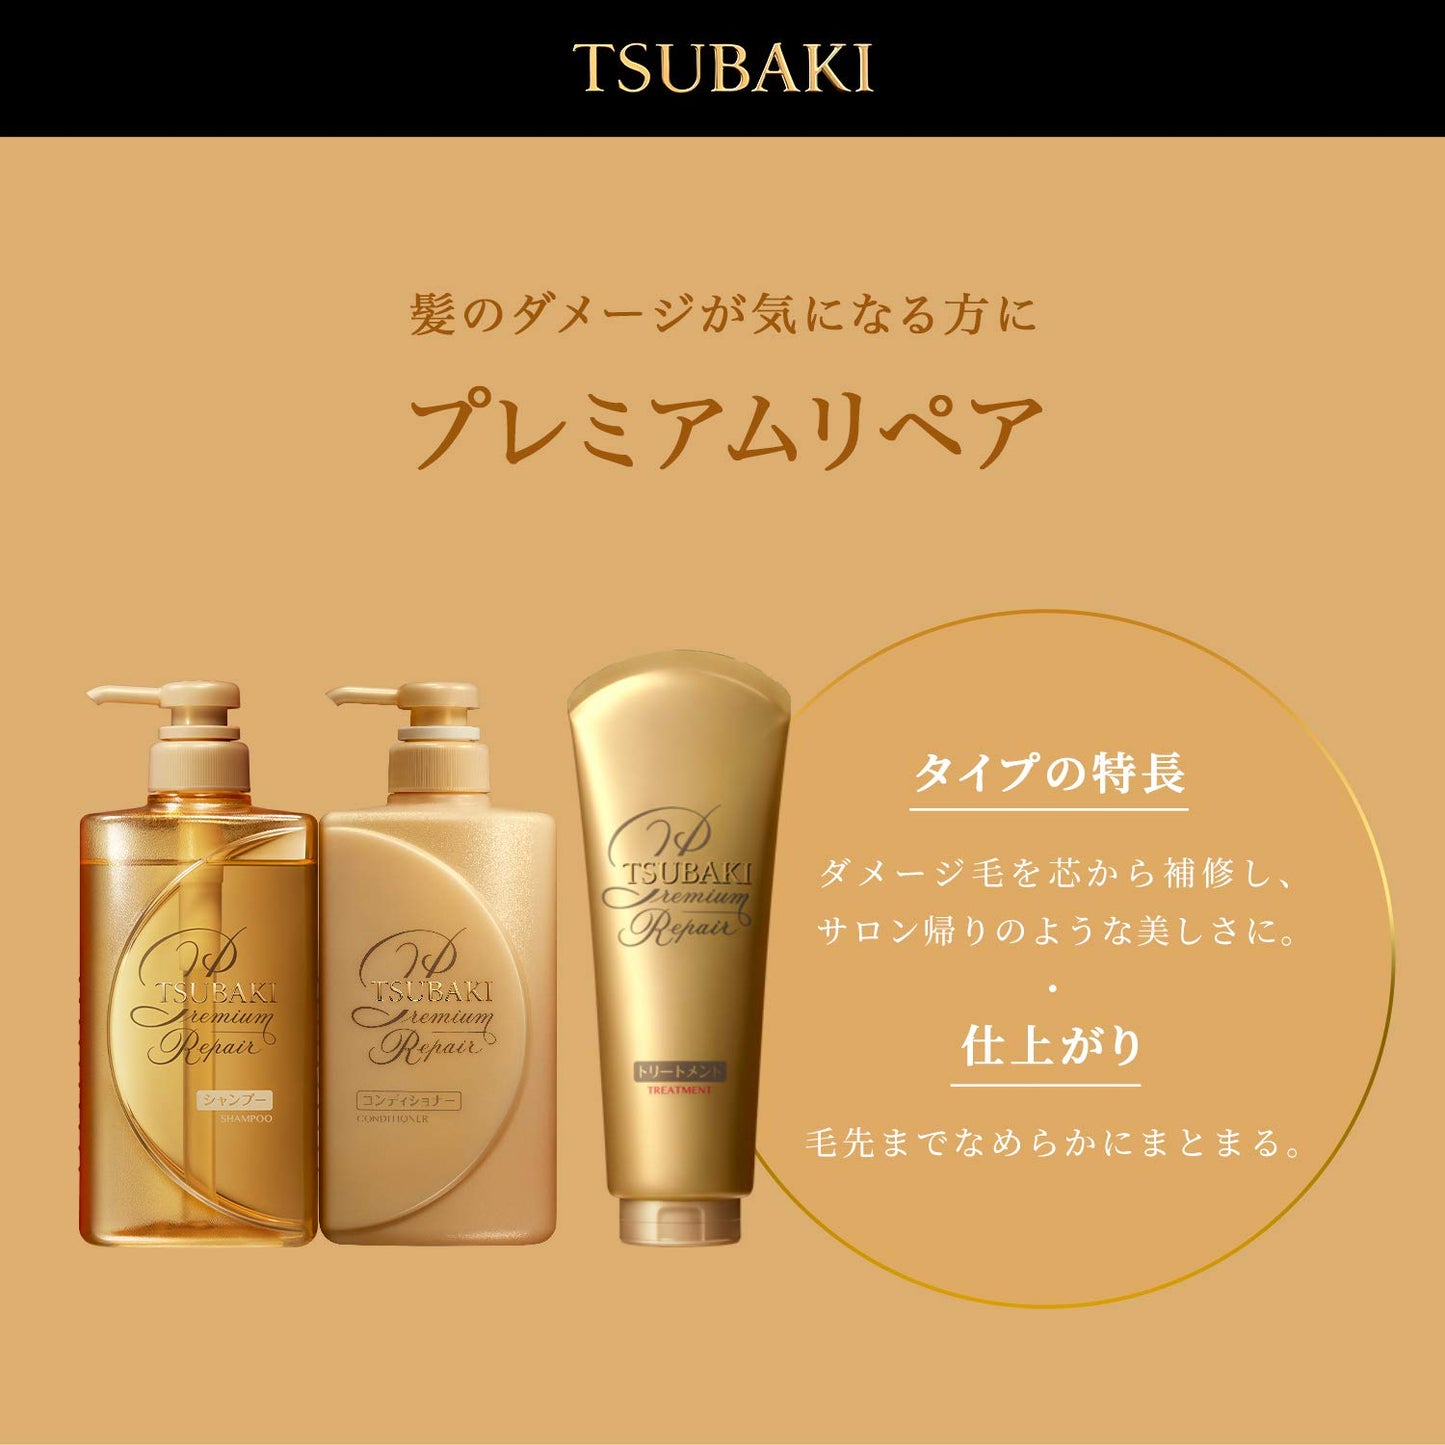 Shiseido Tsubaki Premium Repair Hair - Shampoo/Conditioner/Treatment